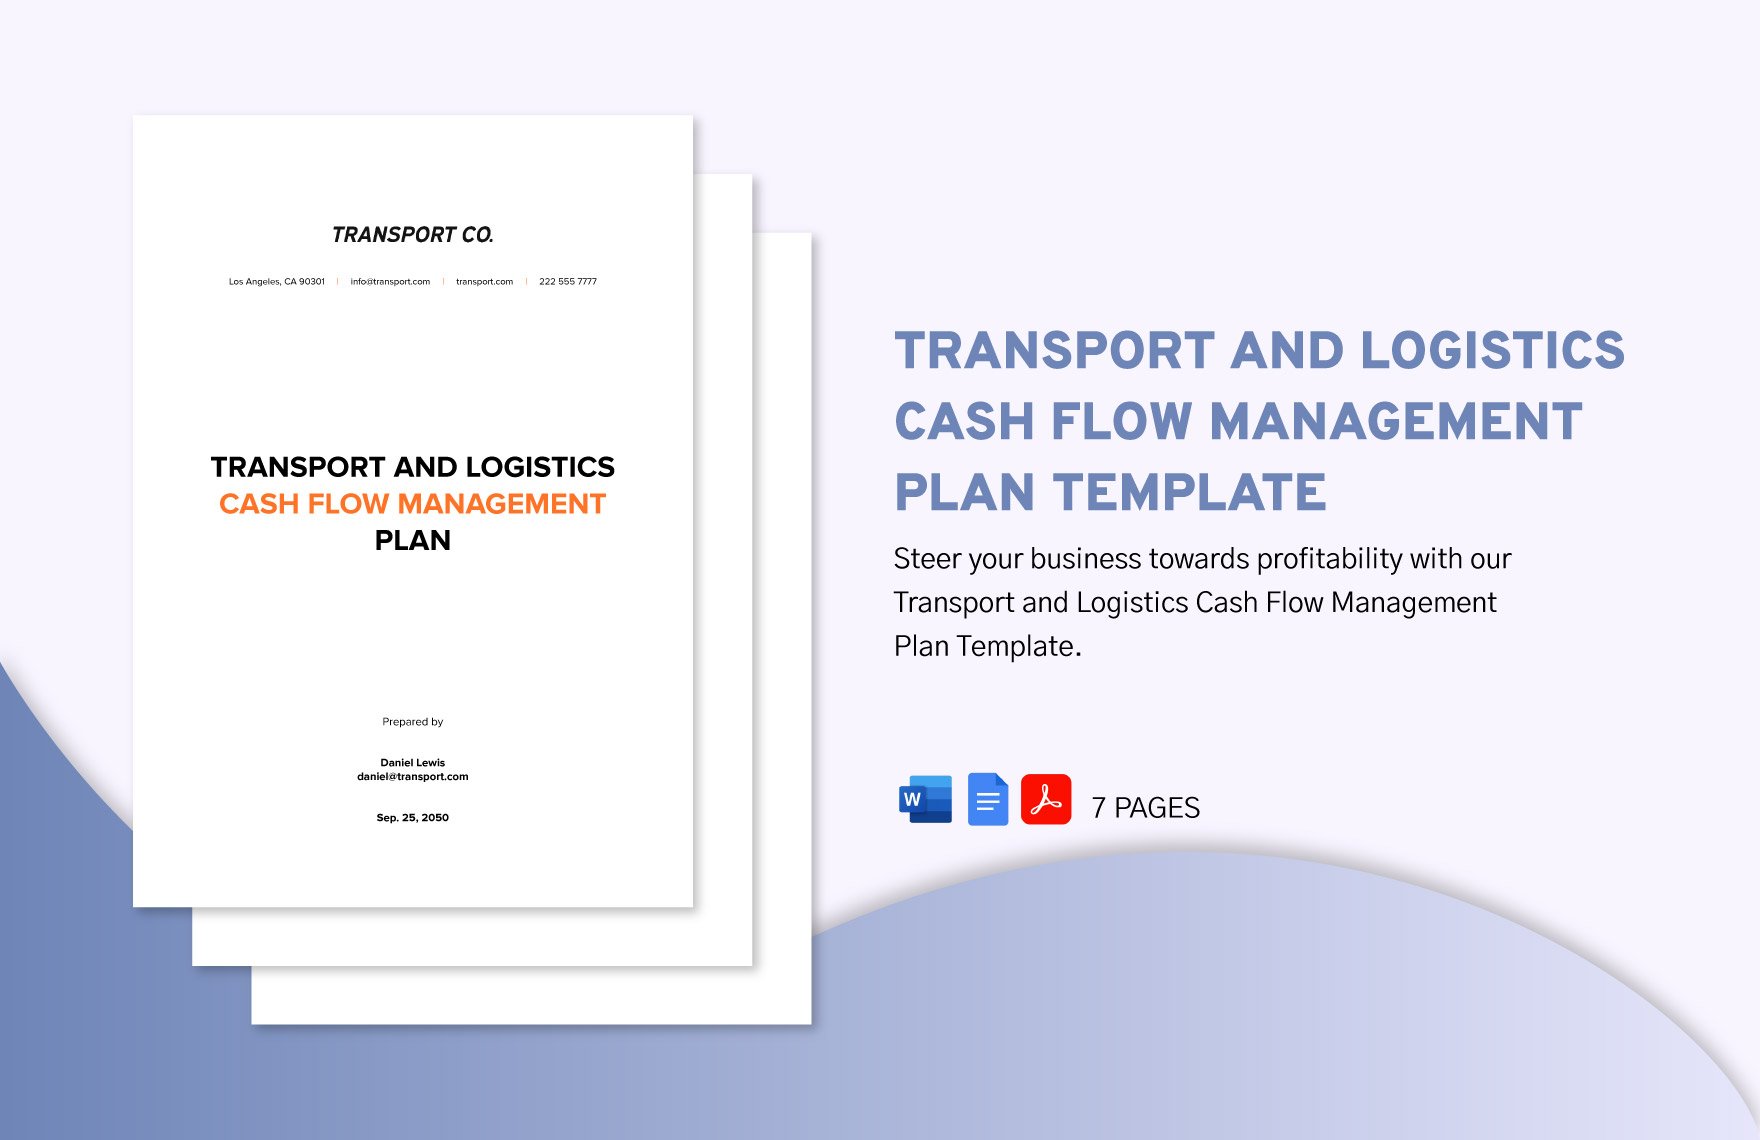 Transport and Logistics Cash Flow Management Plan Template